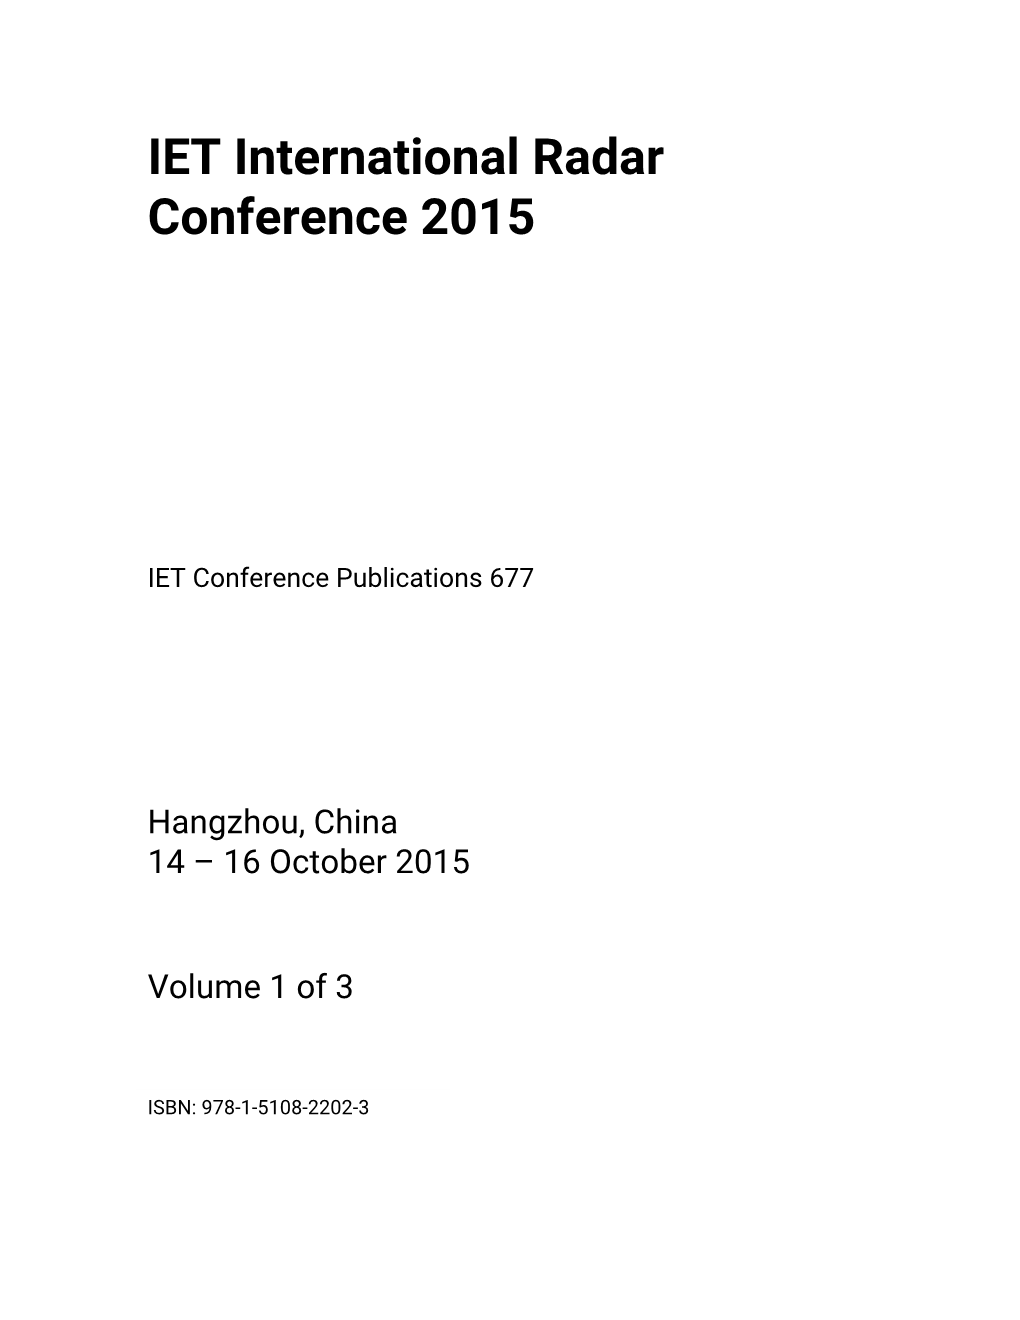 IET International Radar Conference 2015